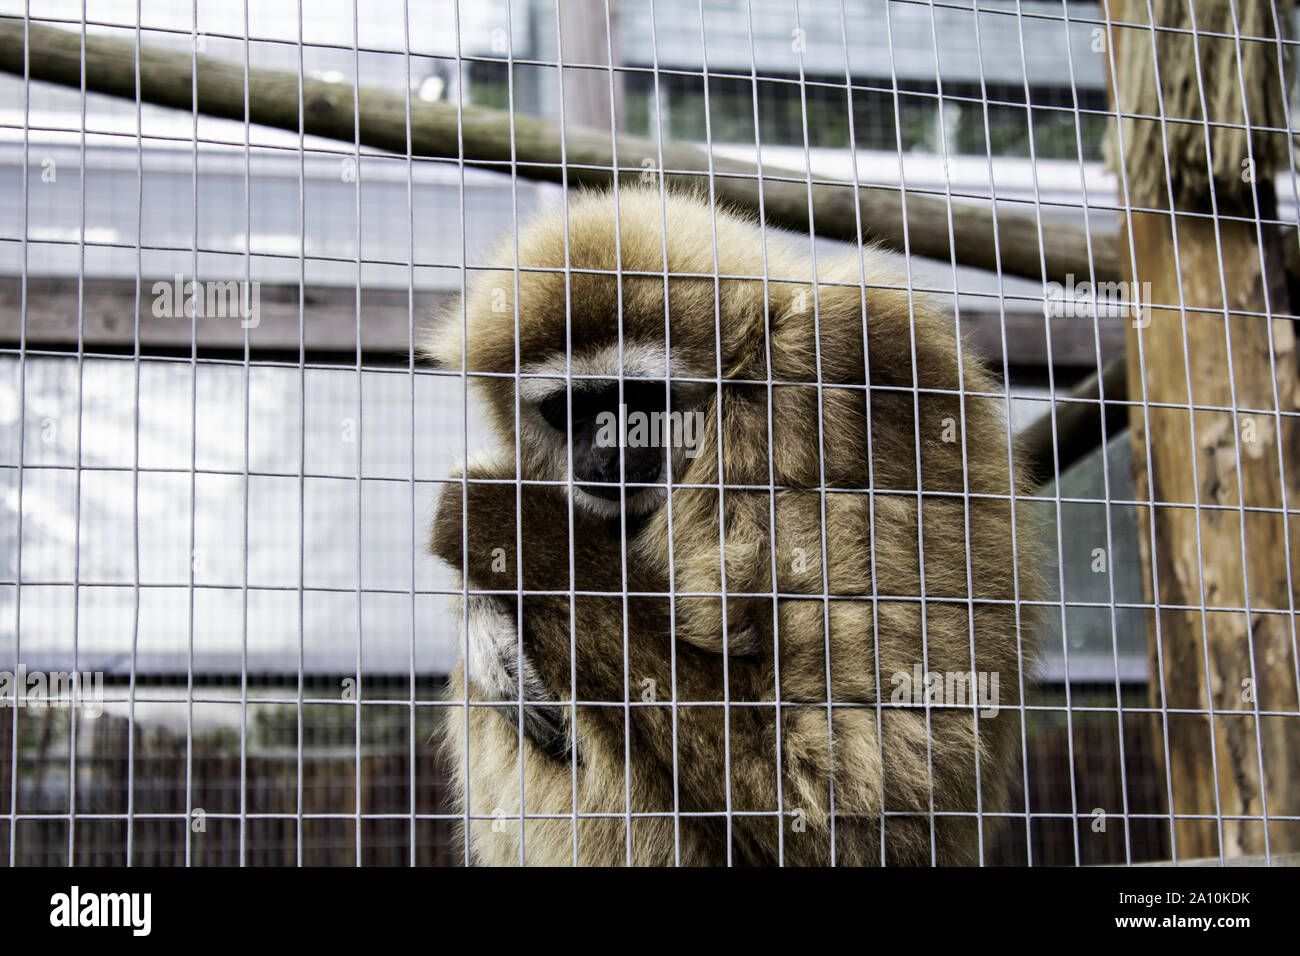 Orangutan locked cage, wild animals abuse, monkeys Stock Photo ...